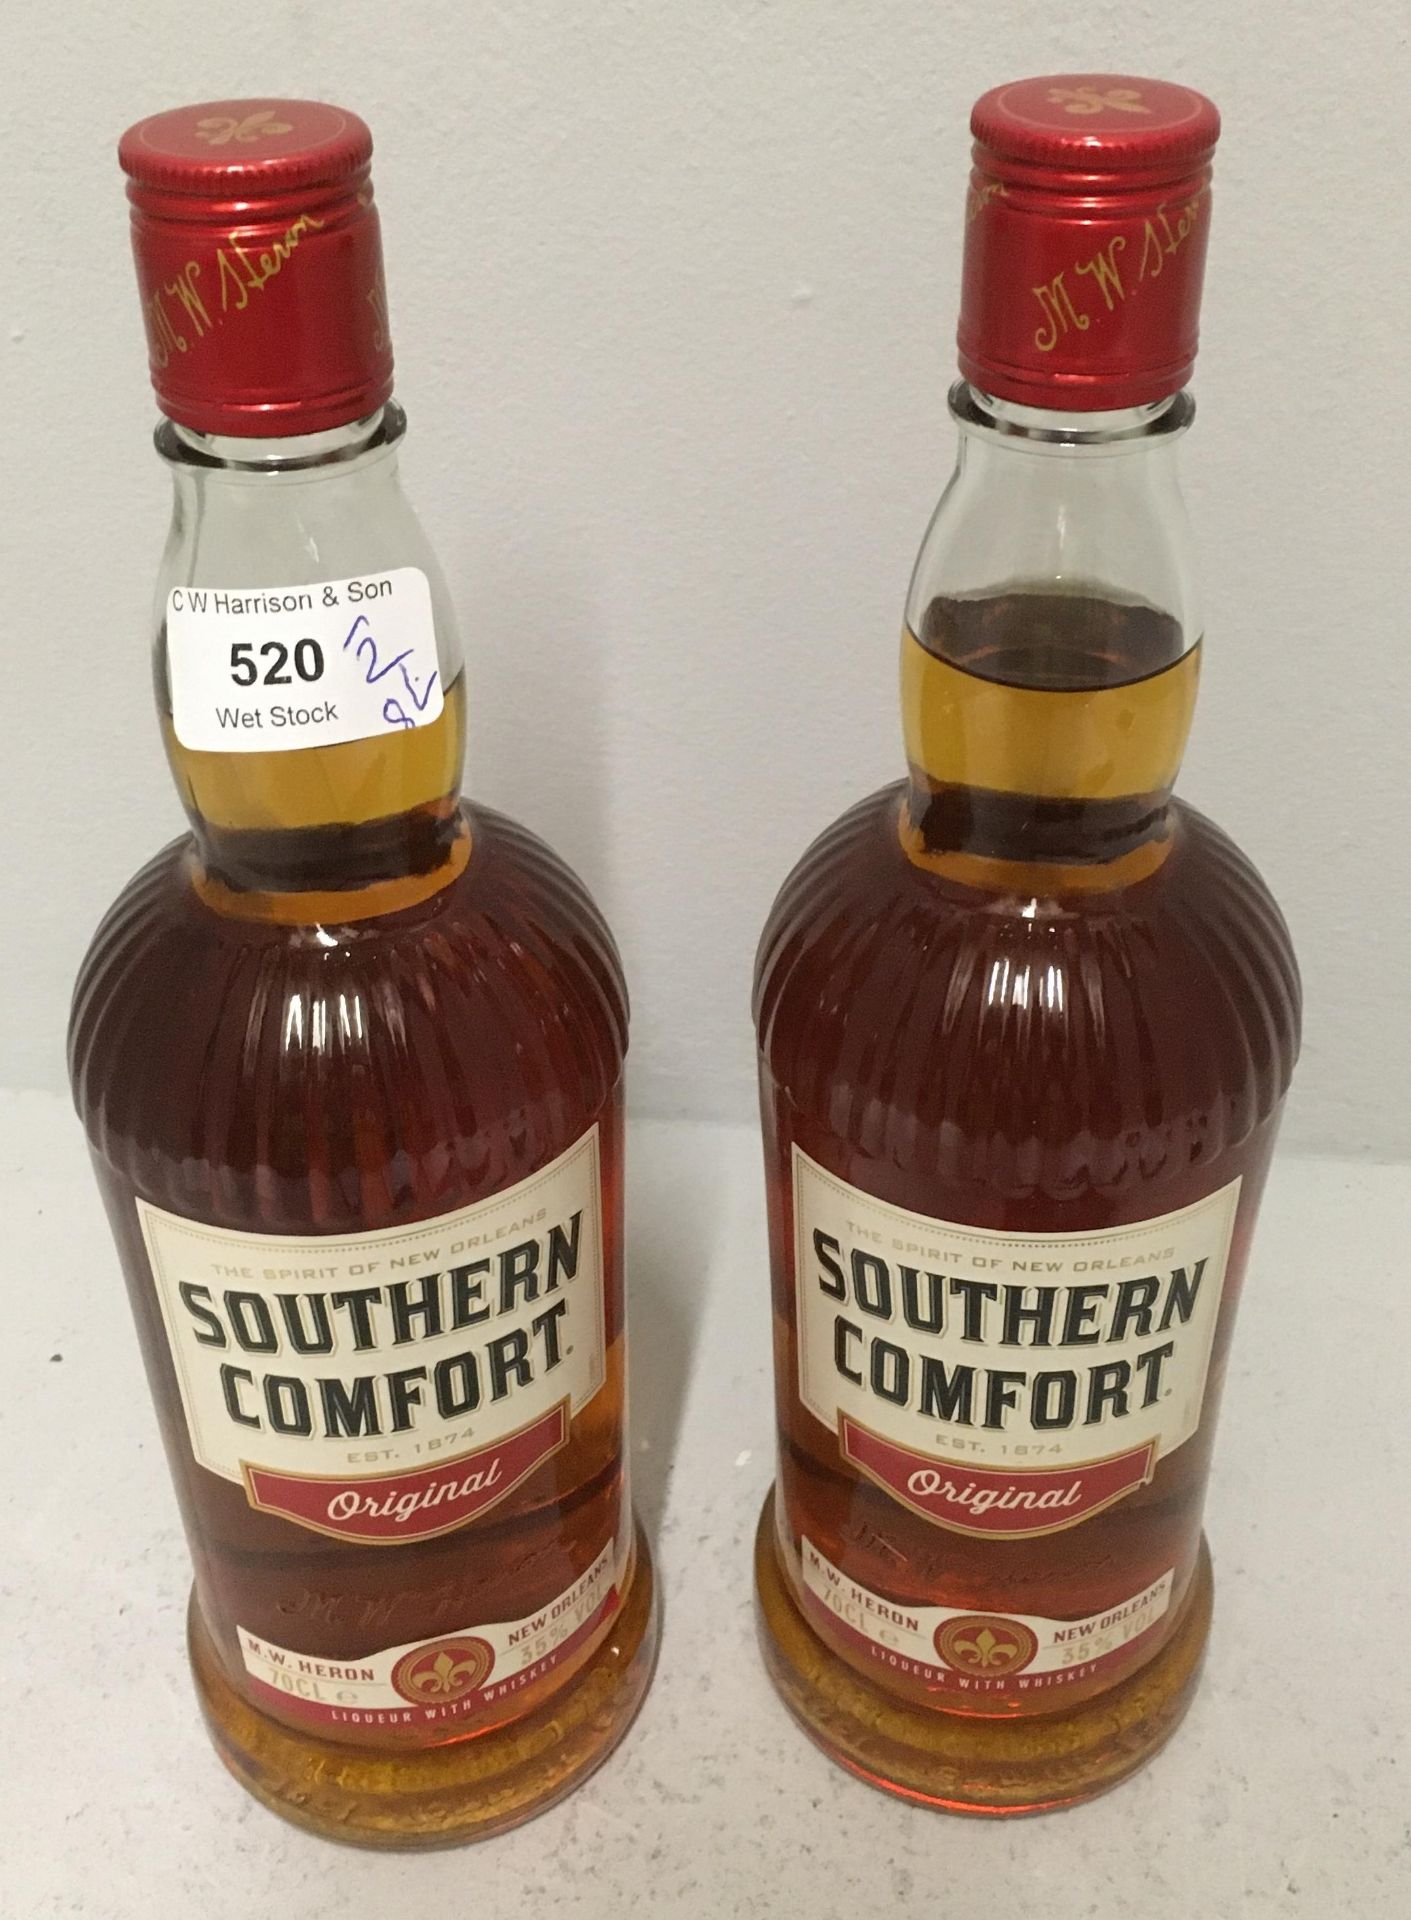 2 x 70cl bottles of Southern Comfort Original